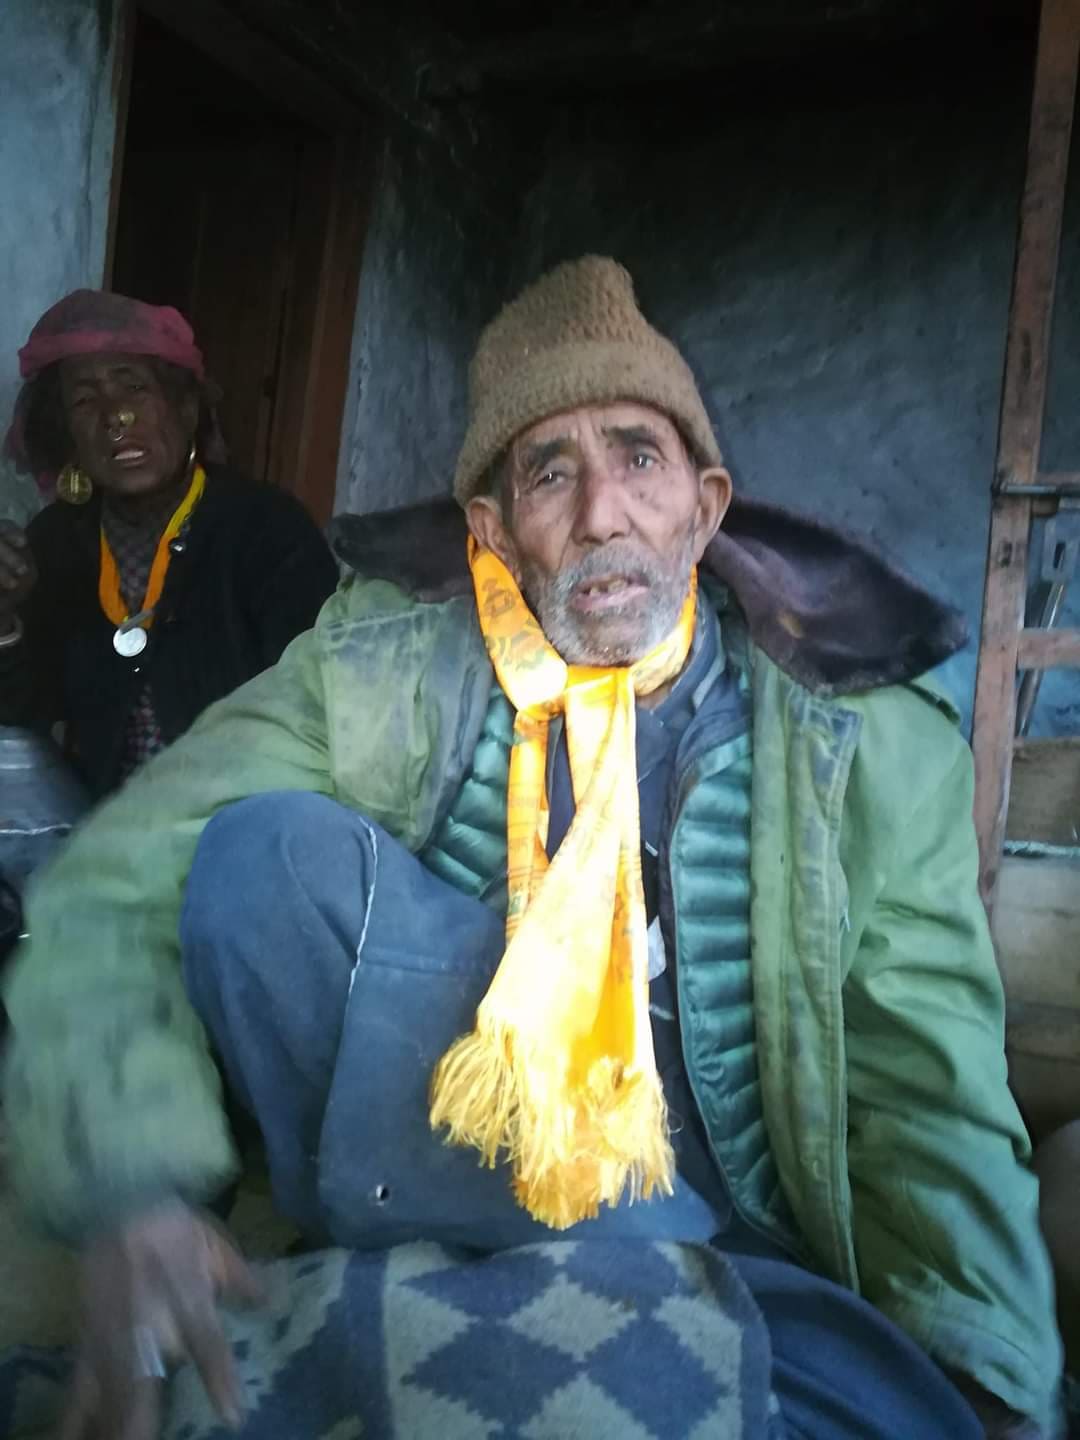 ९२ वर्षिय भण्डारीको निधनः एमाले नेता बोगटी र फडेराद्धारा दुःख व्यक्त